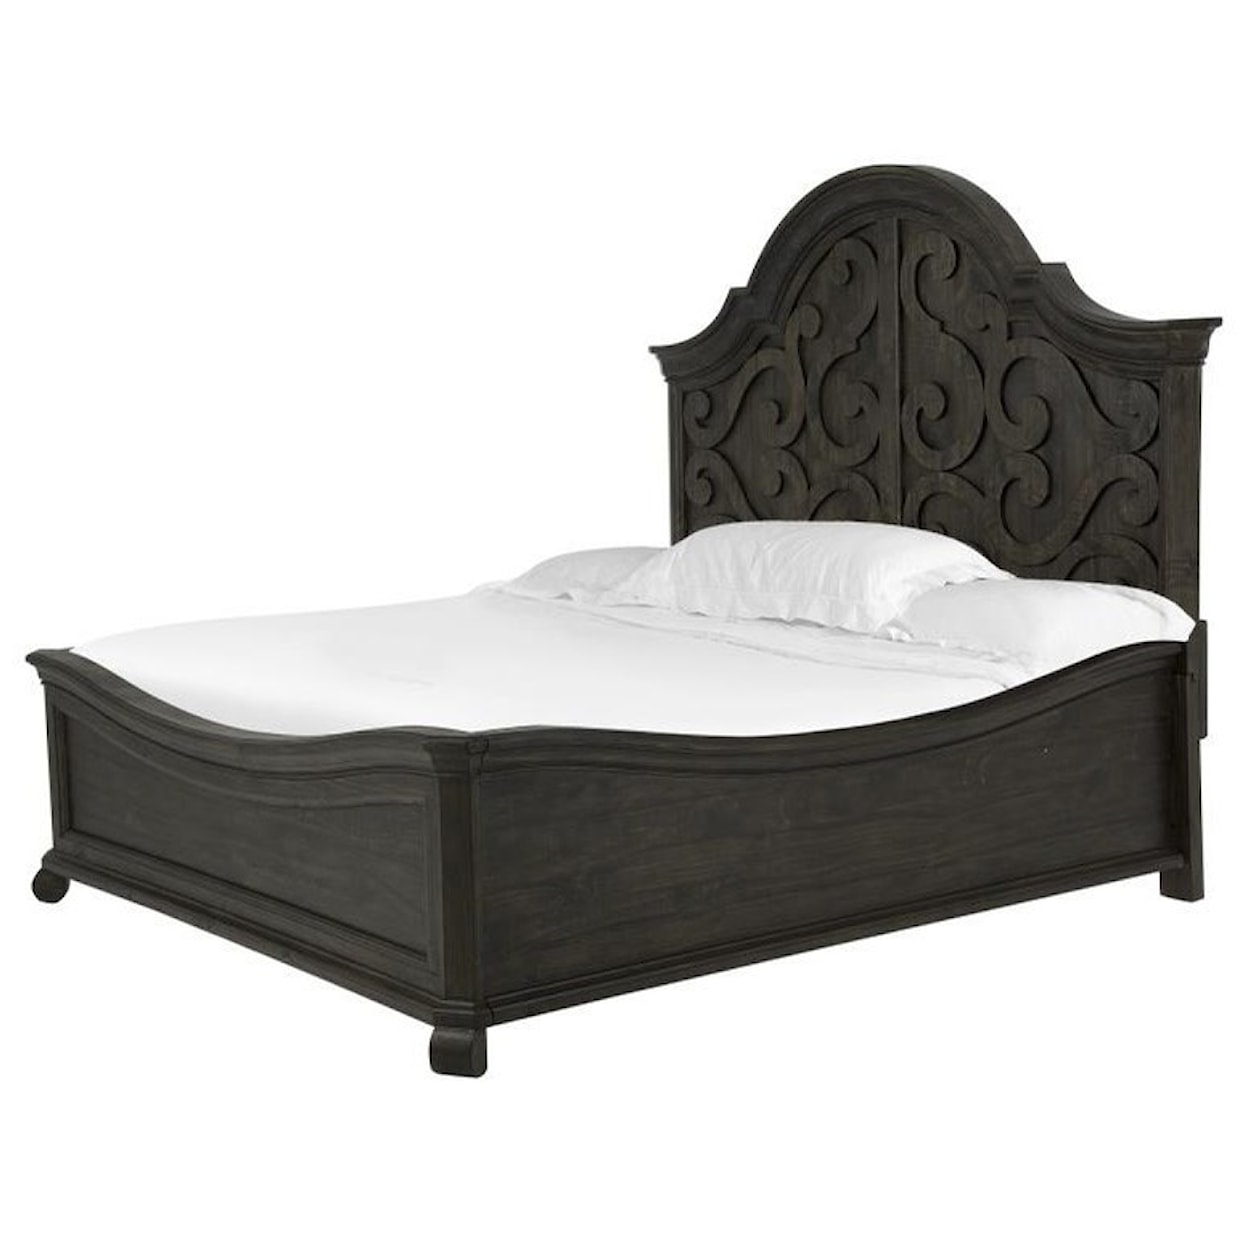 Belfort Select Aldie Springs Queen Shaped Panel Bed